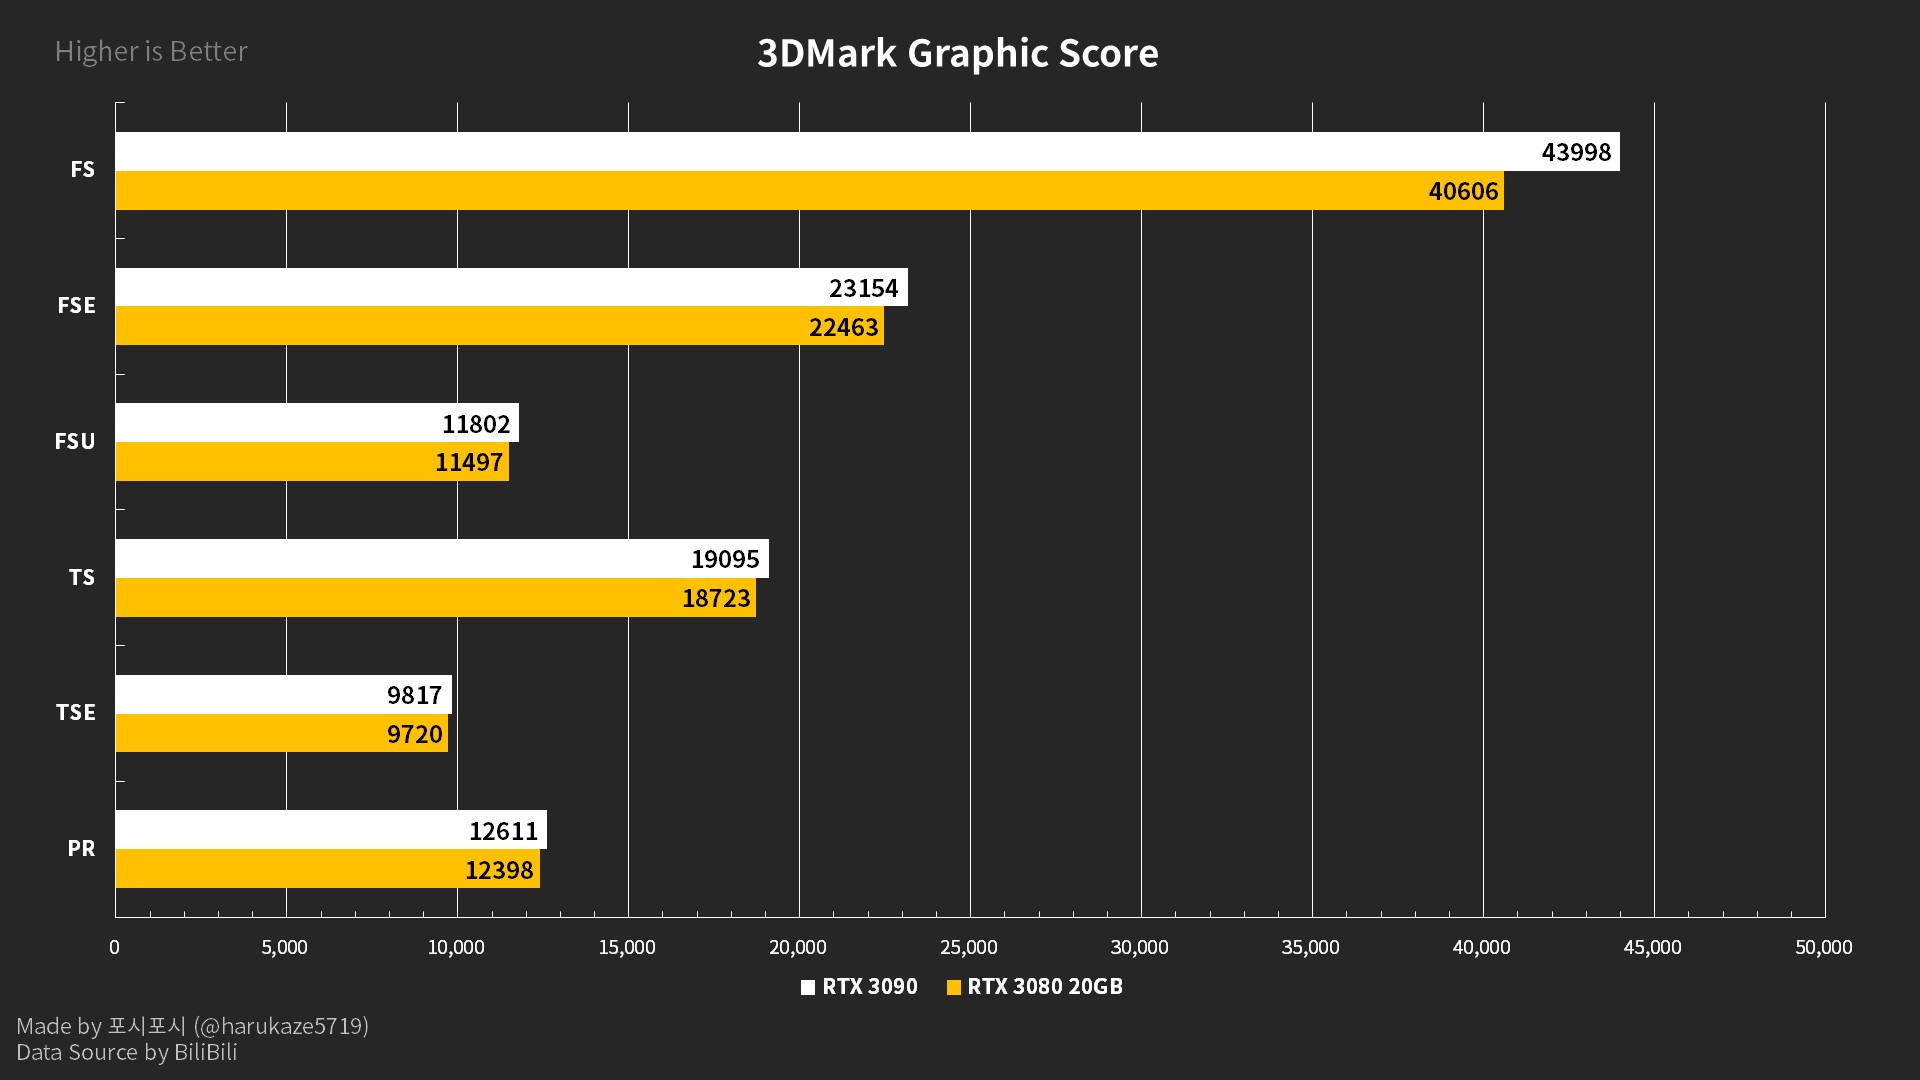 GeForce-RTX-3080-20GB-3DMark.jpg